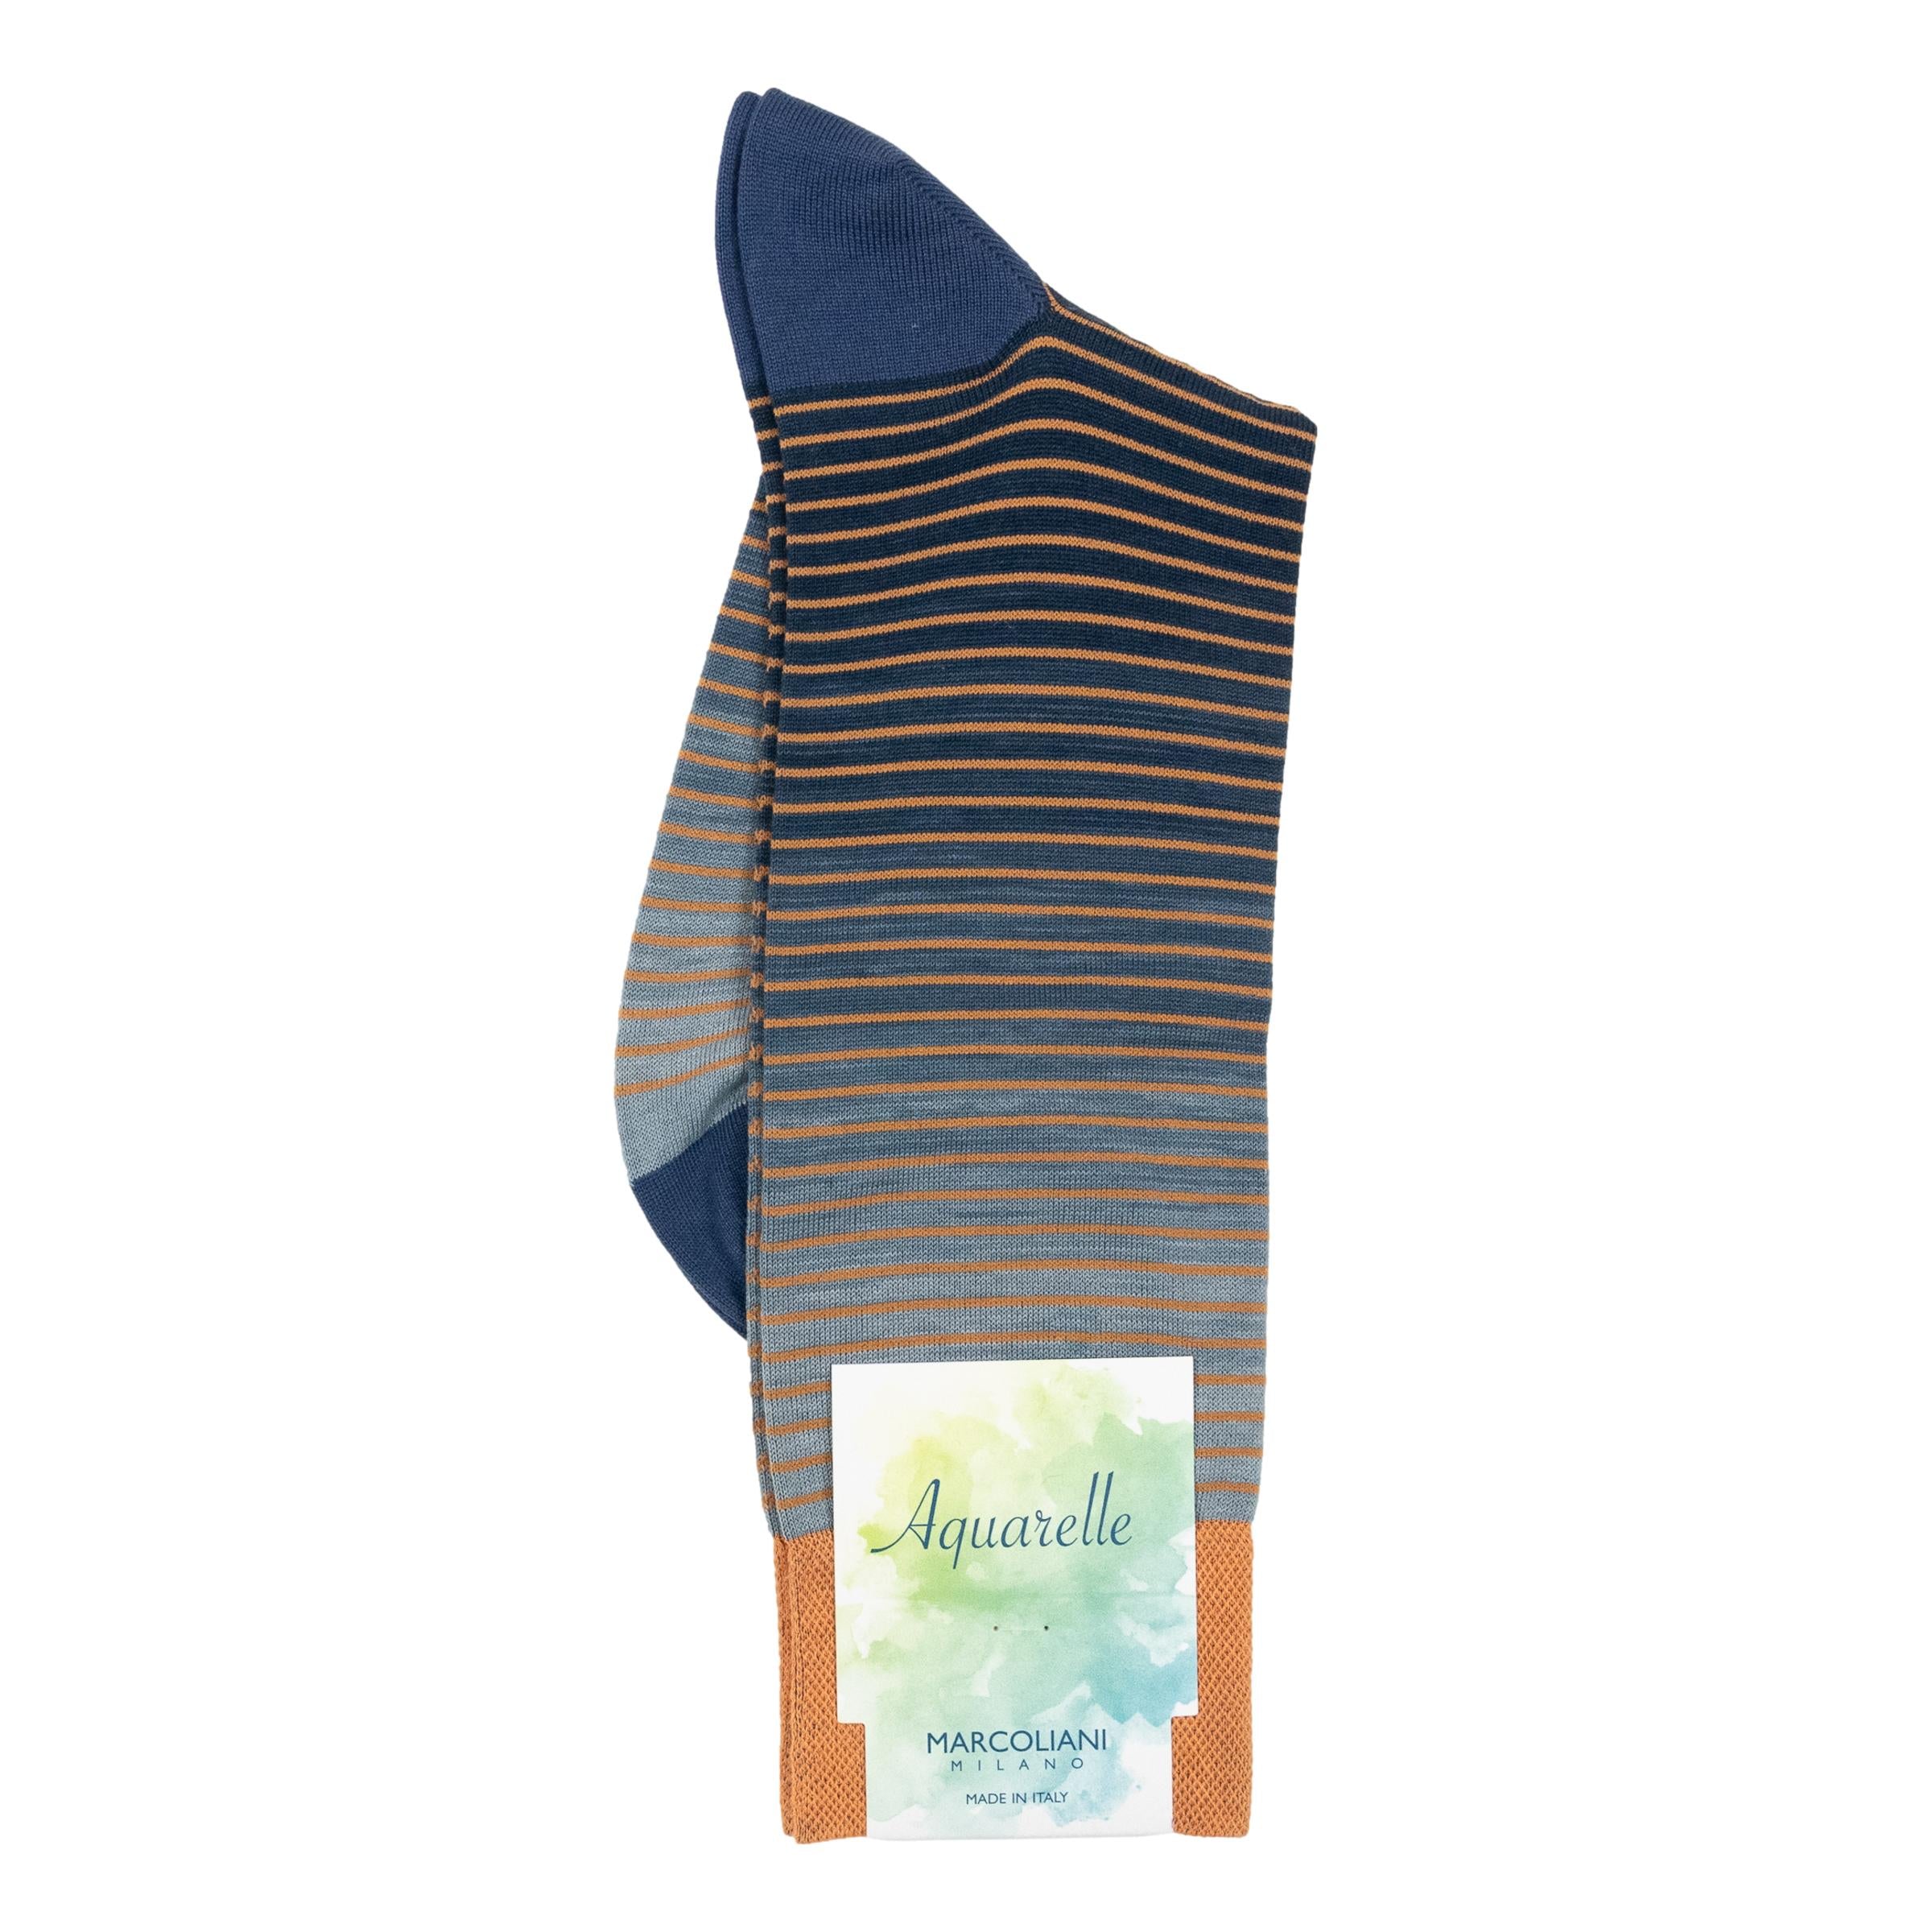 Aquarelle Shaded Stripes Mid-Calf Dress Socks